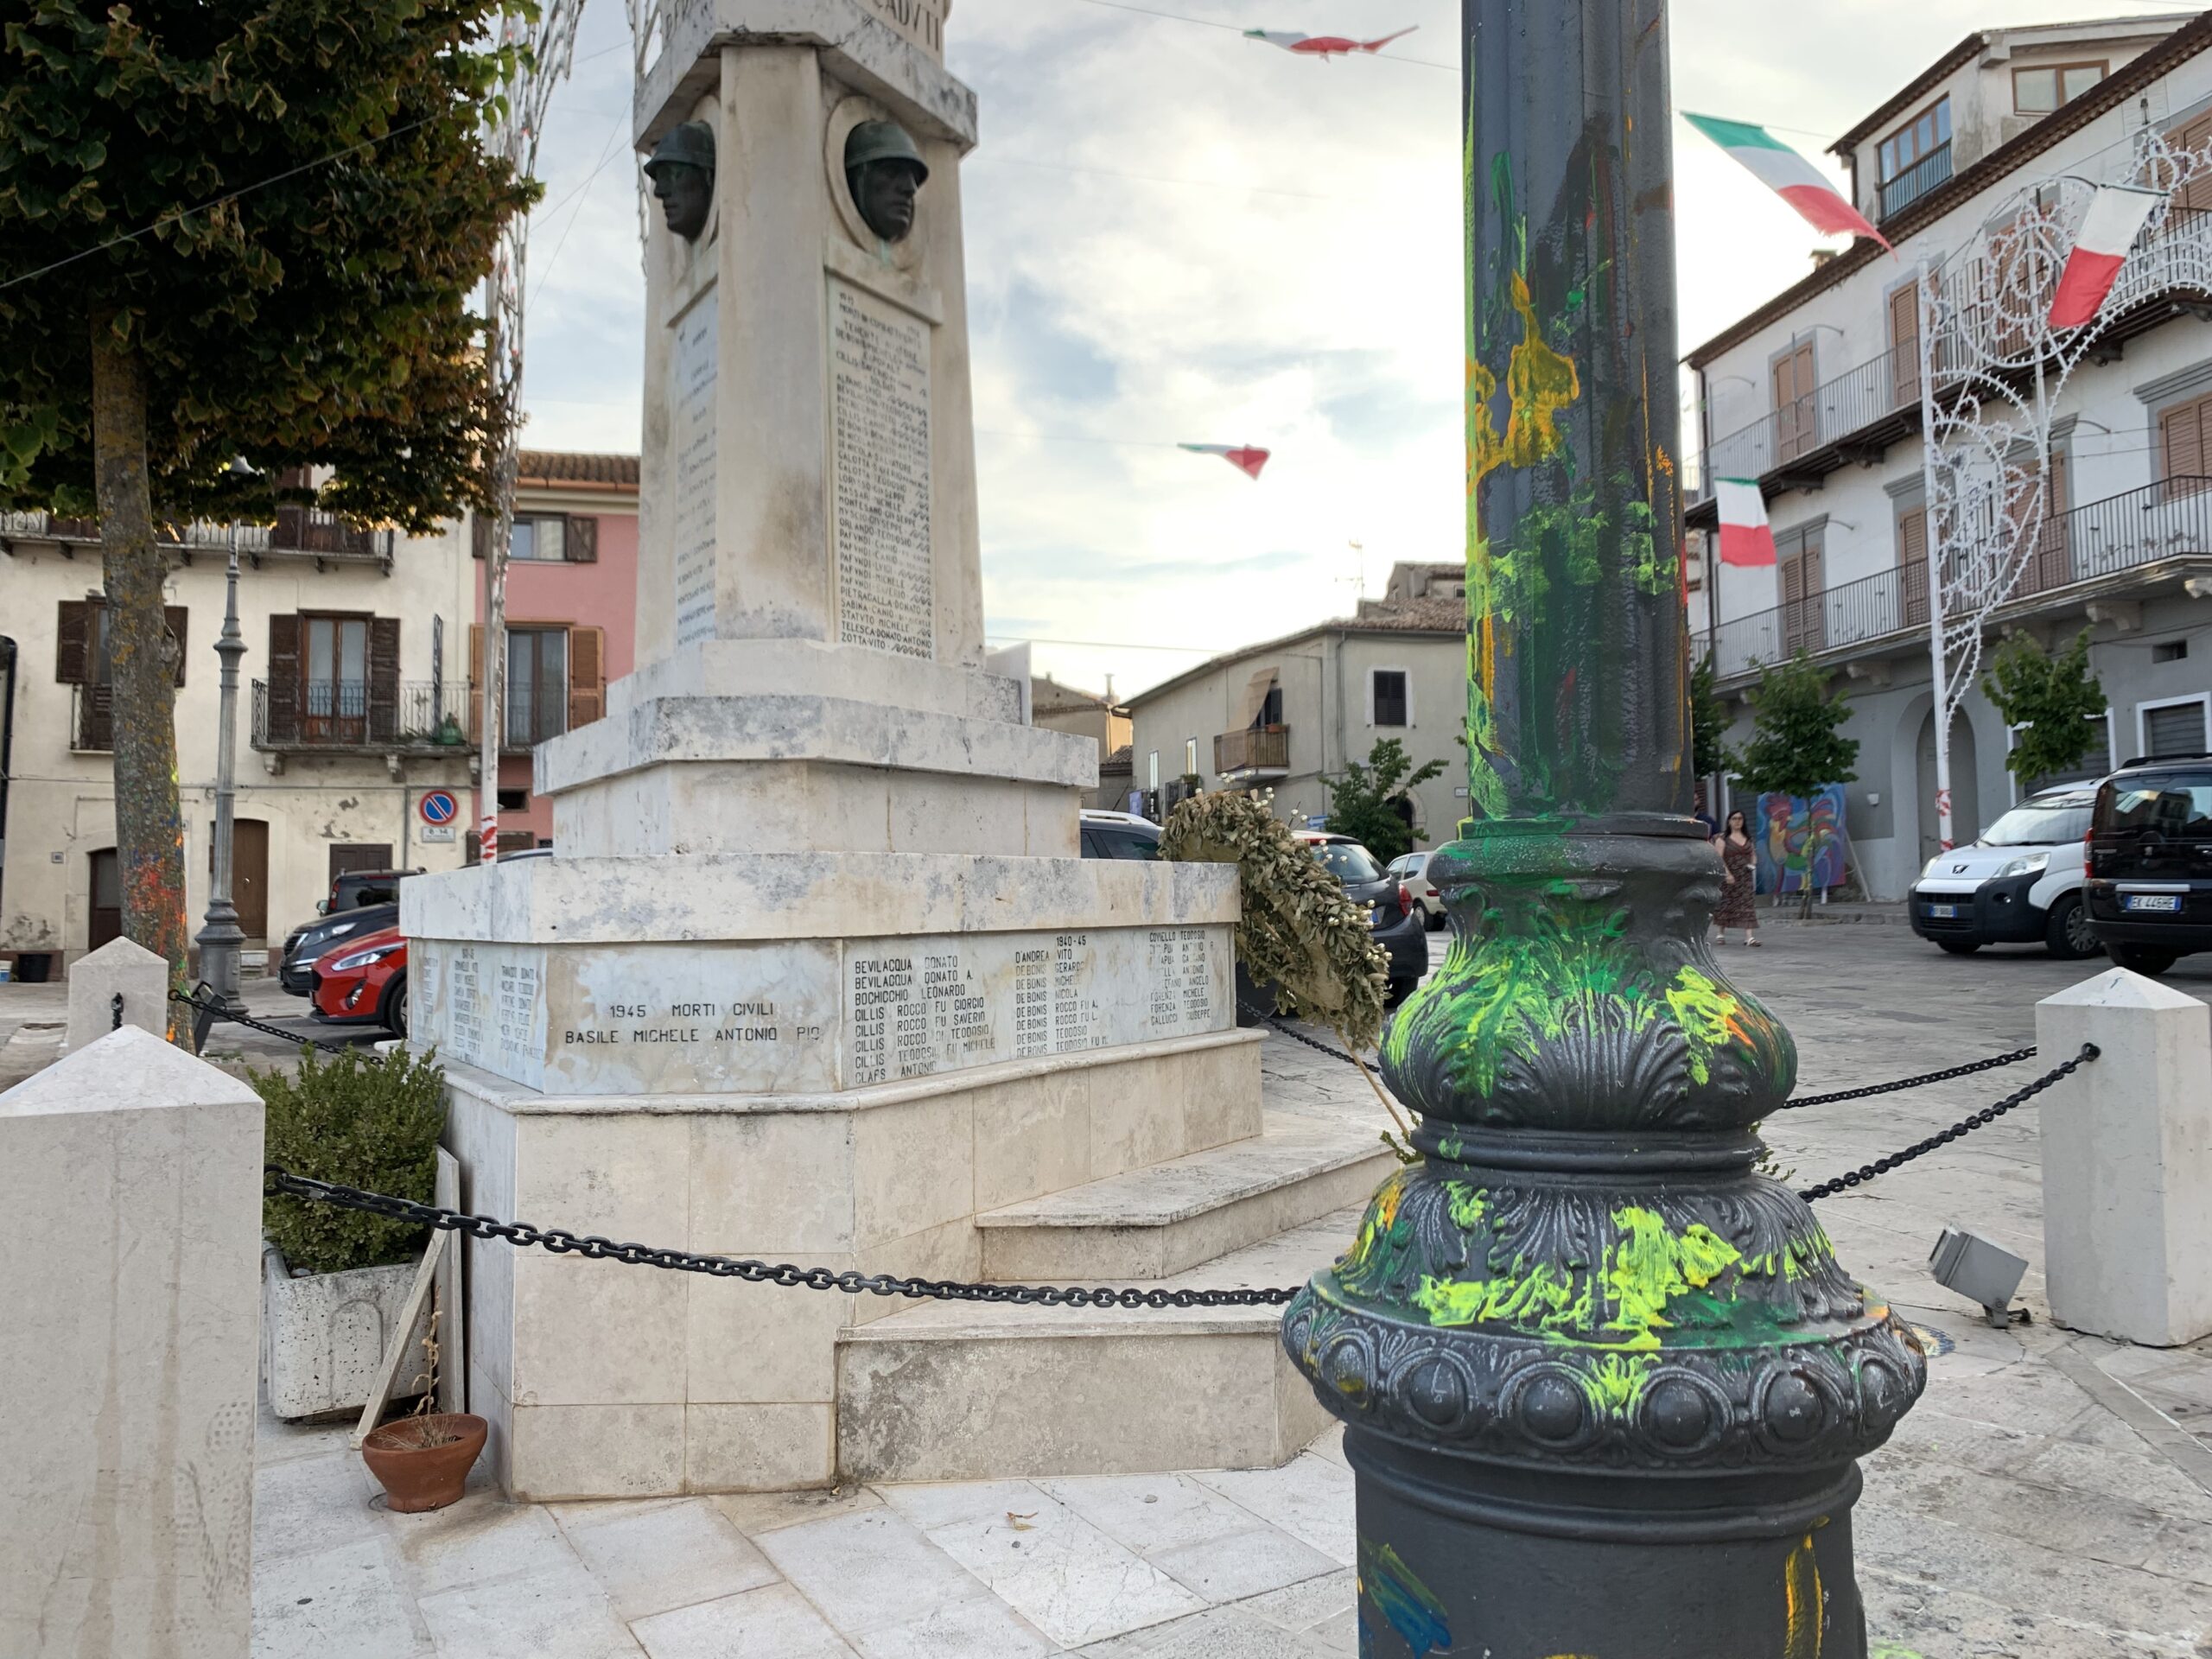 Piazza Pincipe Umberto